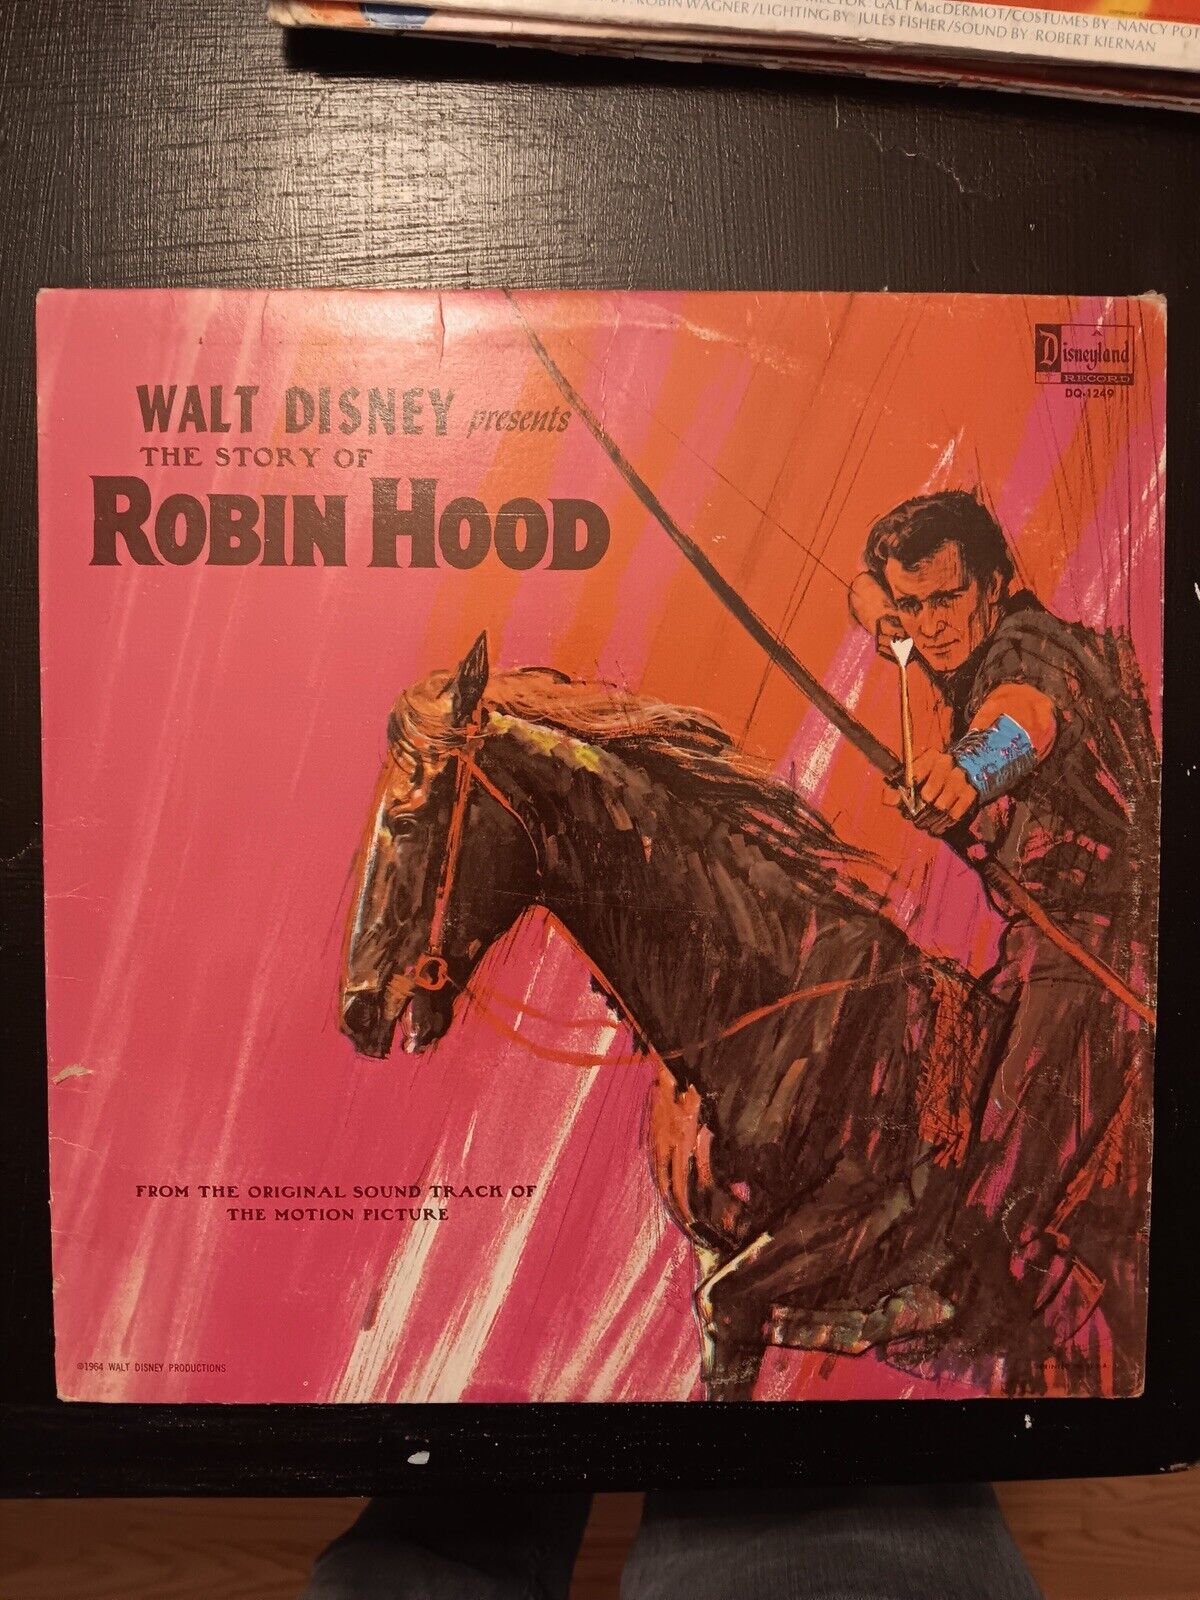 Vintage 1960s WALT DISNEY STORY OF ROBIN HOOD VINYL LP Soundtrack